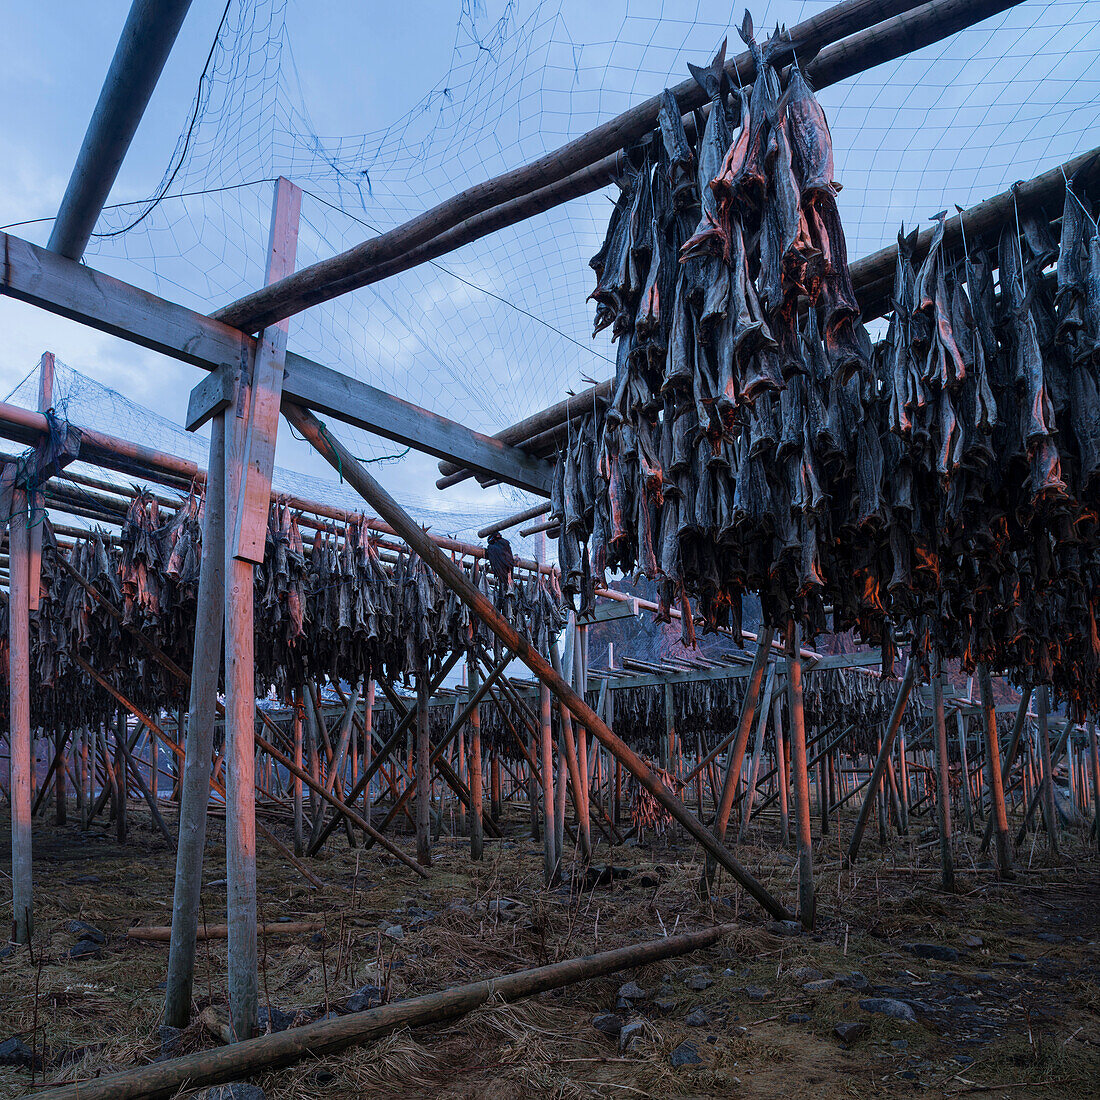 Cod Stockfish hang to dry in cold winter air, Topp??ya, Reine, Moskenes??y, Lofoten Islands, Norway